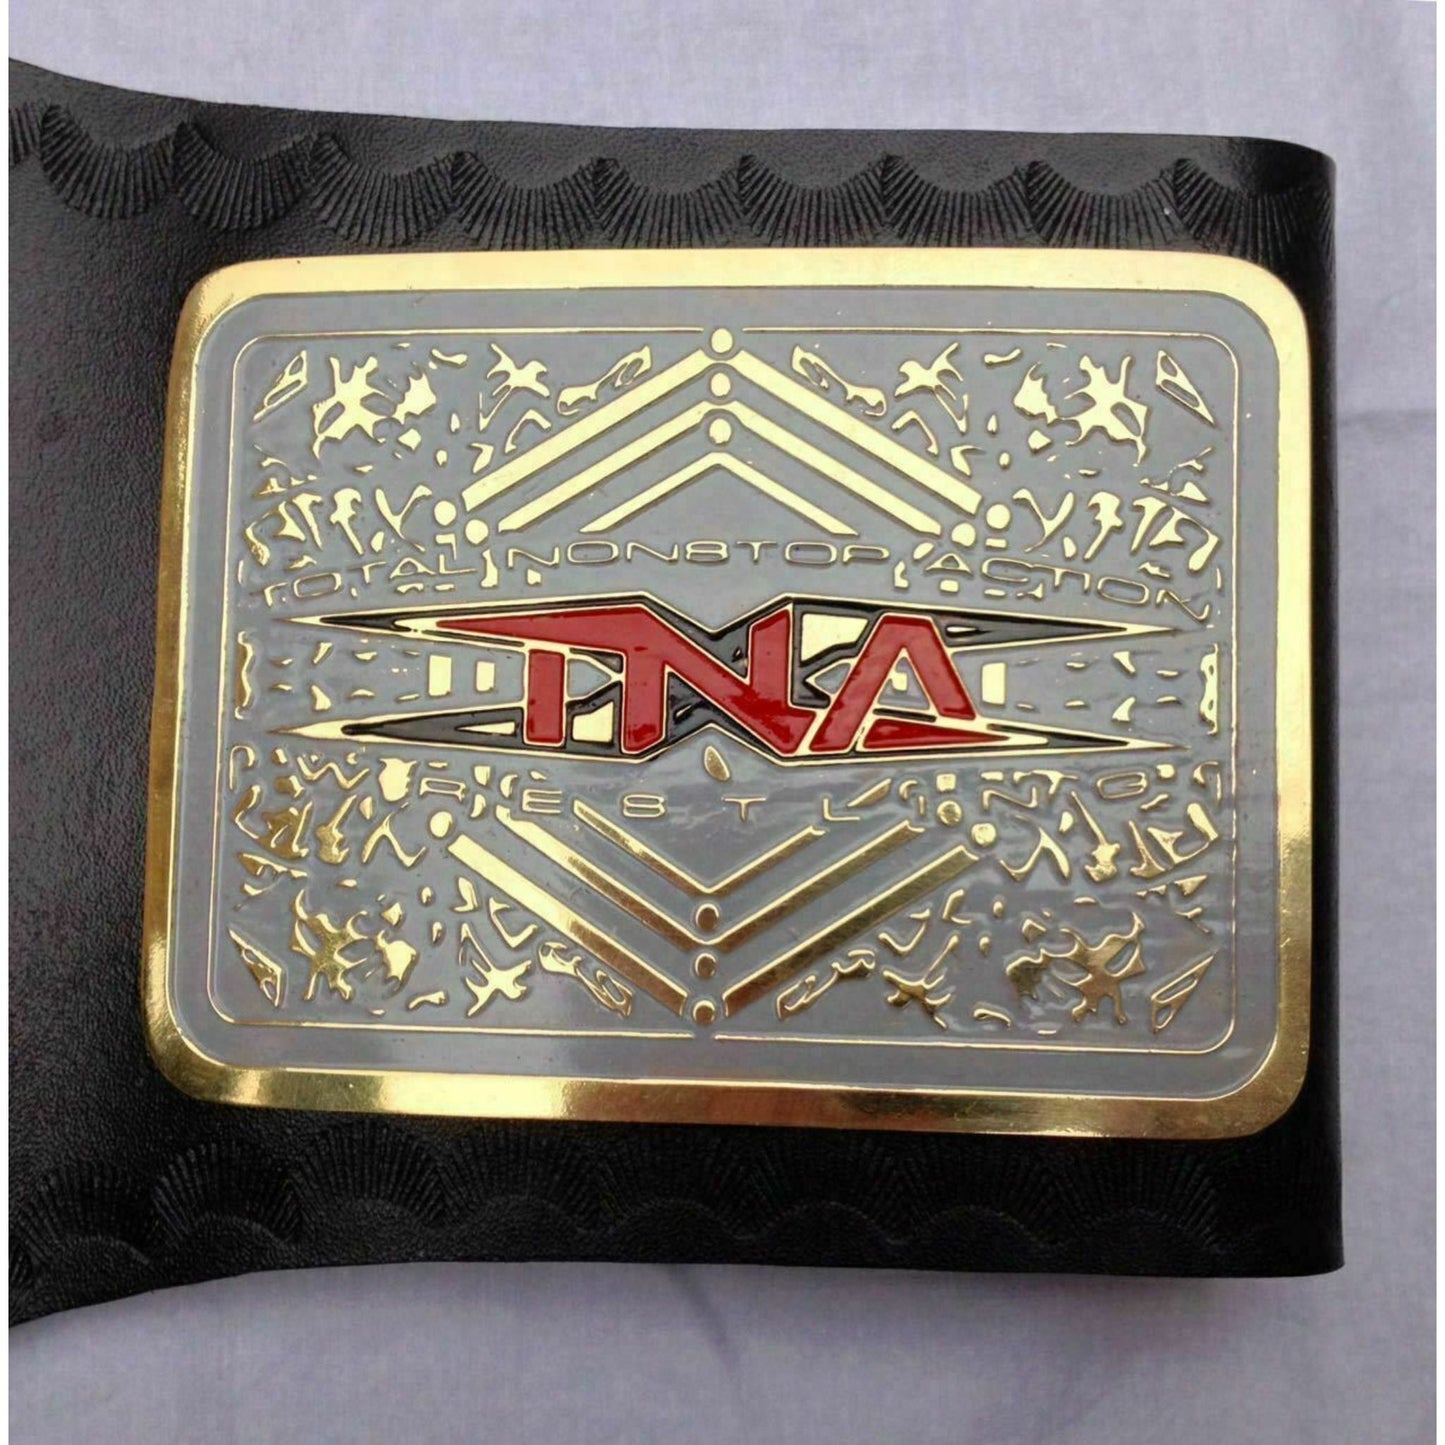 TNA X Division Championship Replica Title Belt